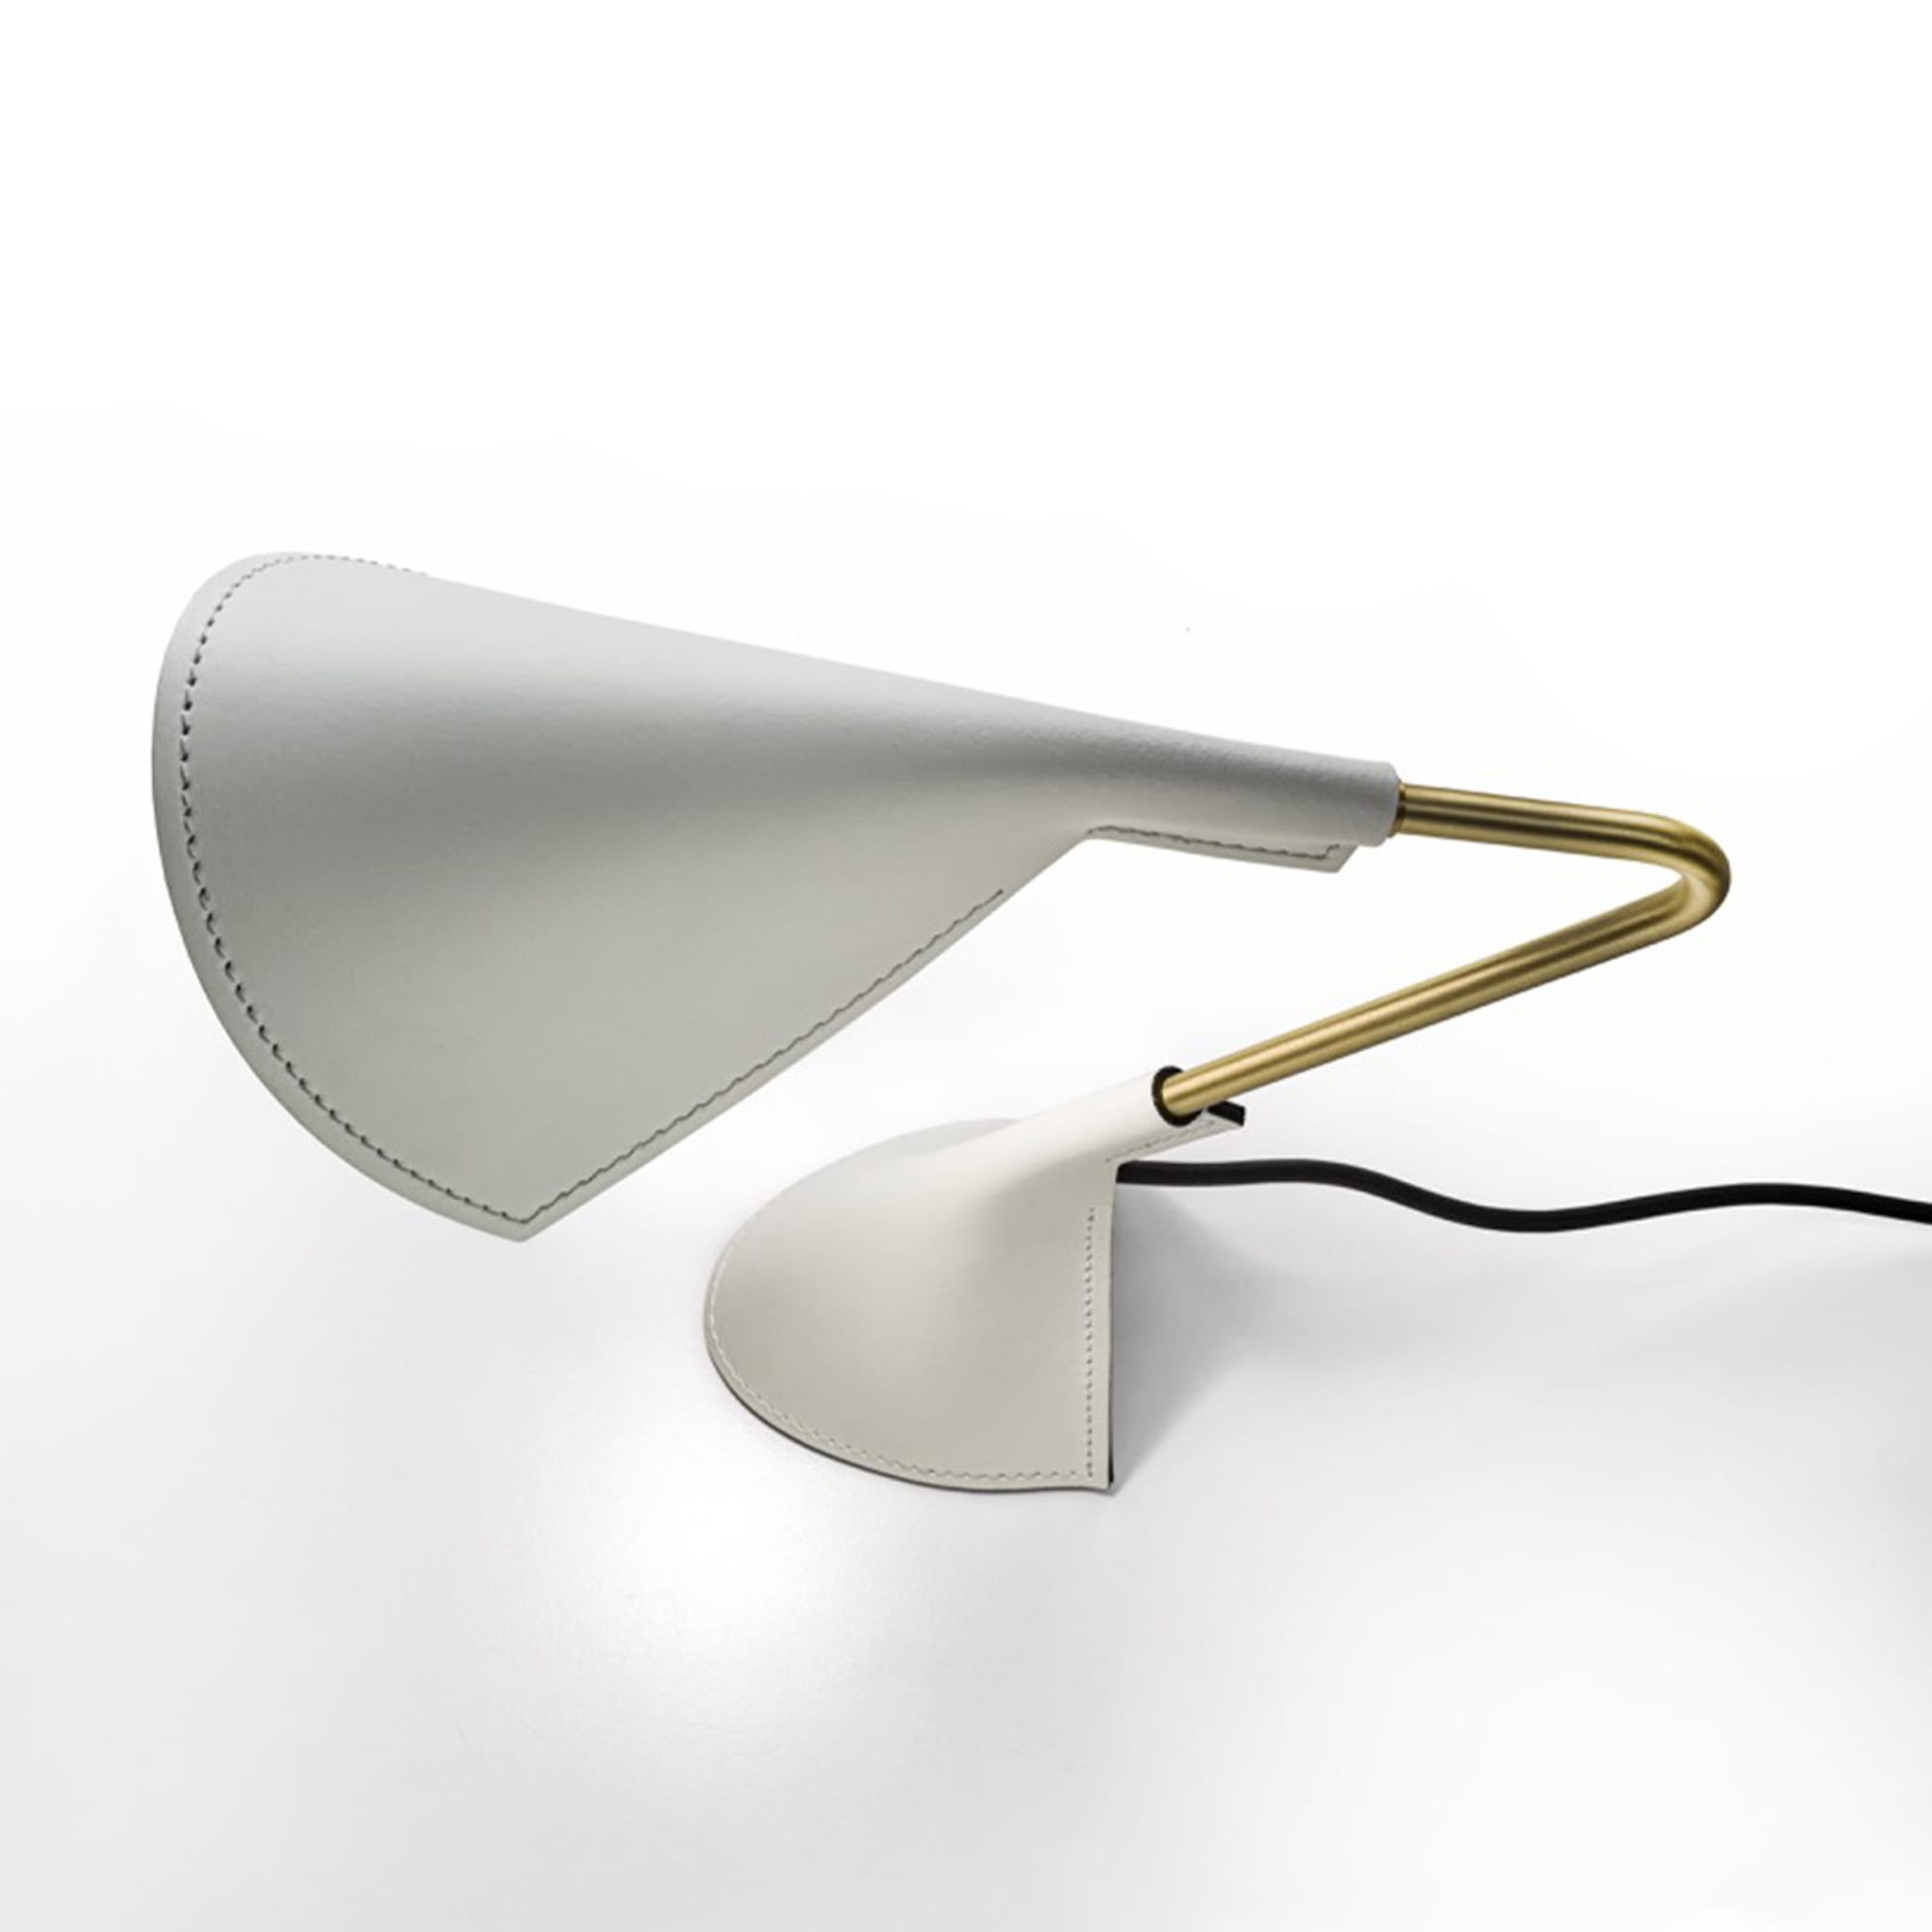 Duffy White Desk Lamp #1 - Alternative view 3